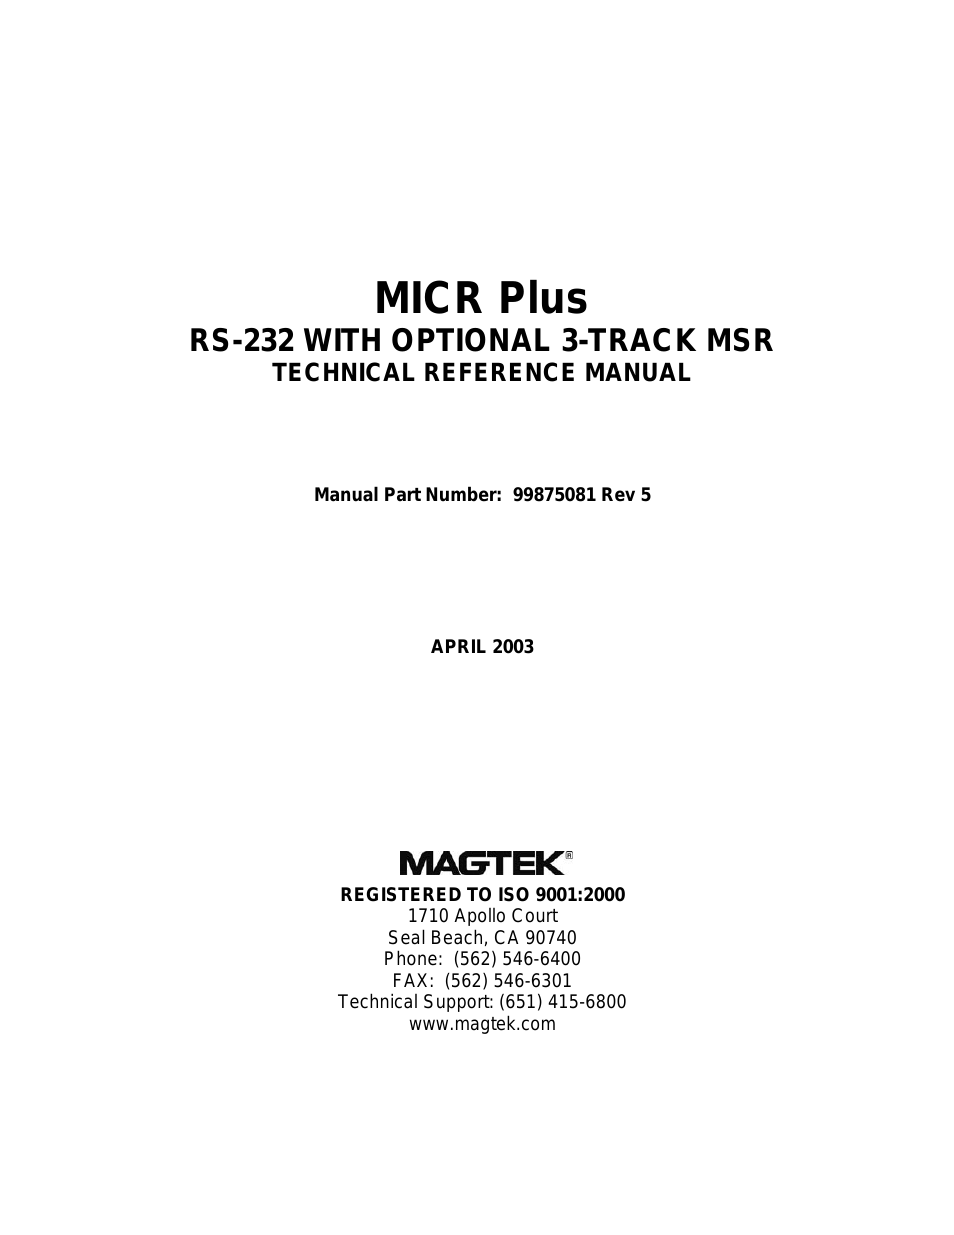 MICR Plus RS-232